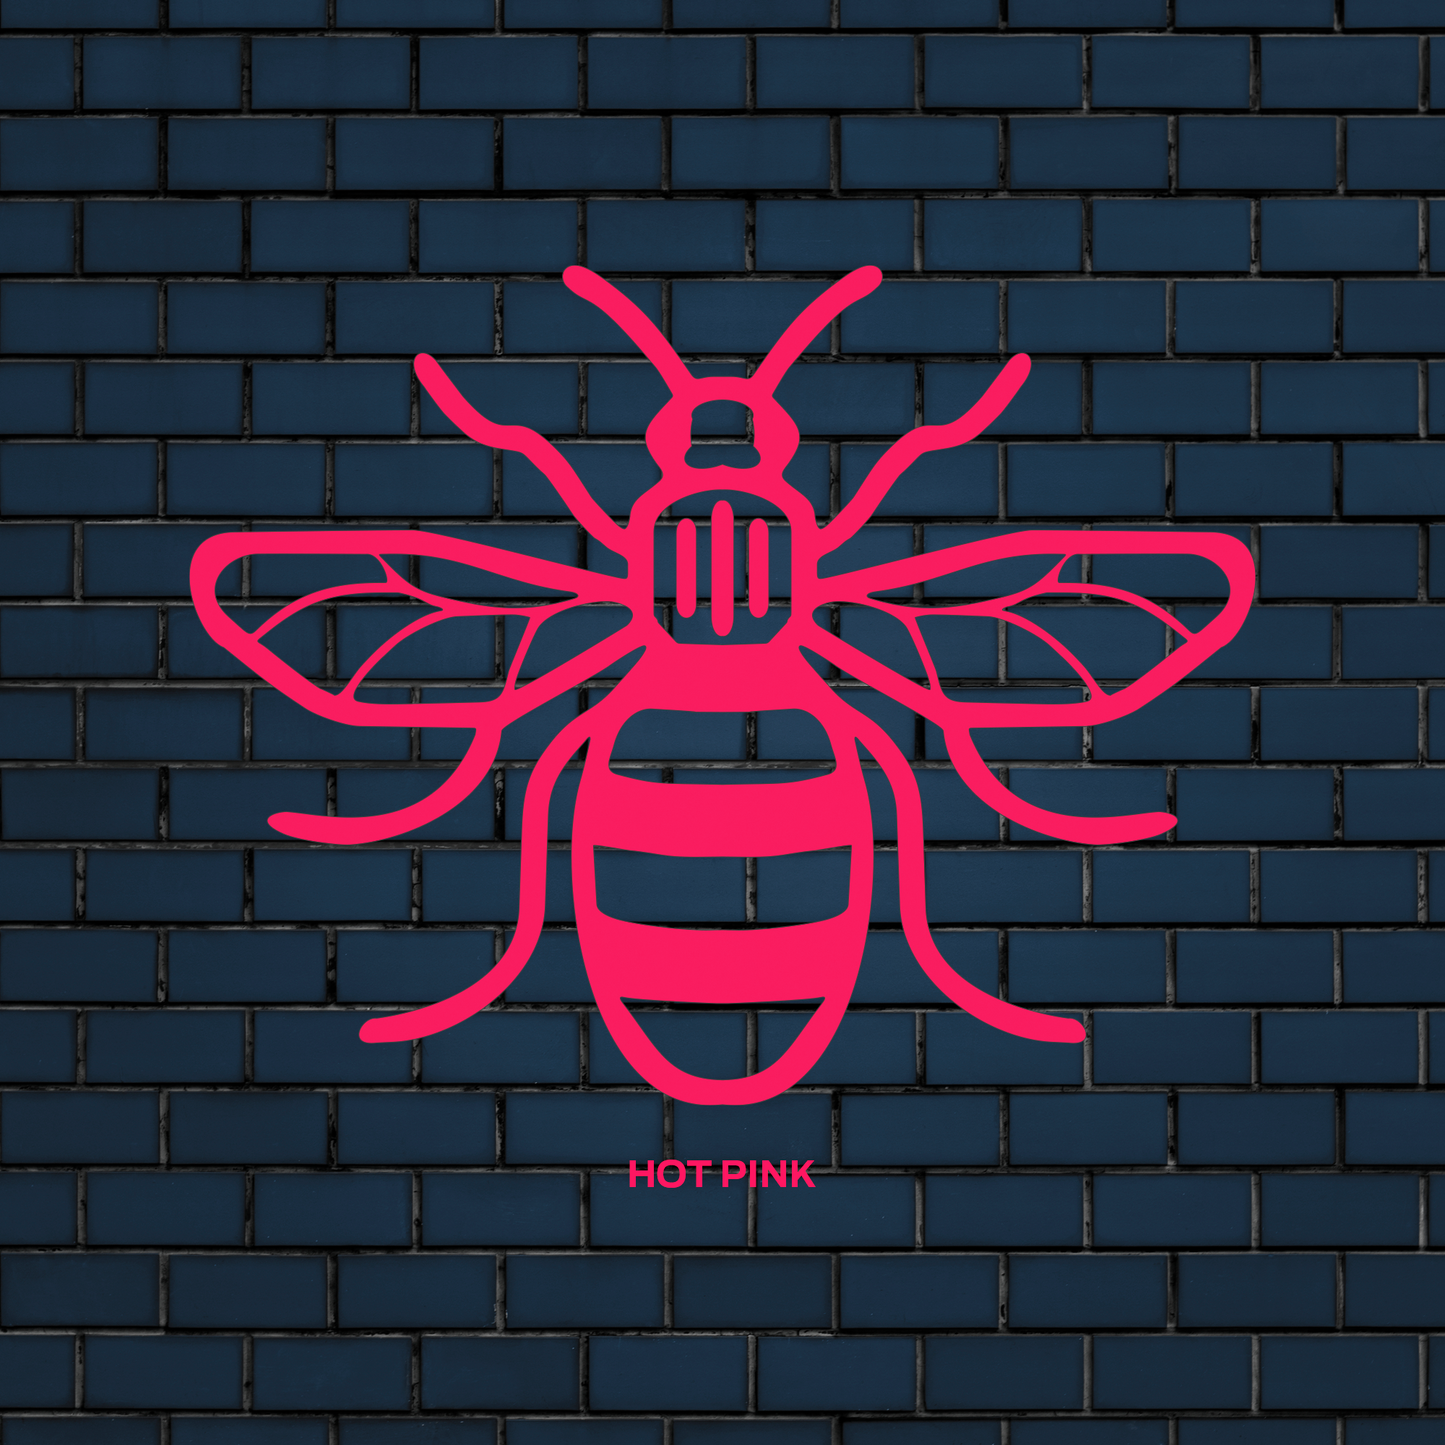 Manchester Bee vinyl decal